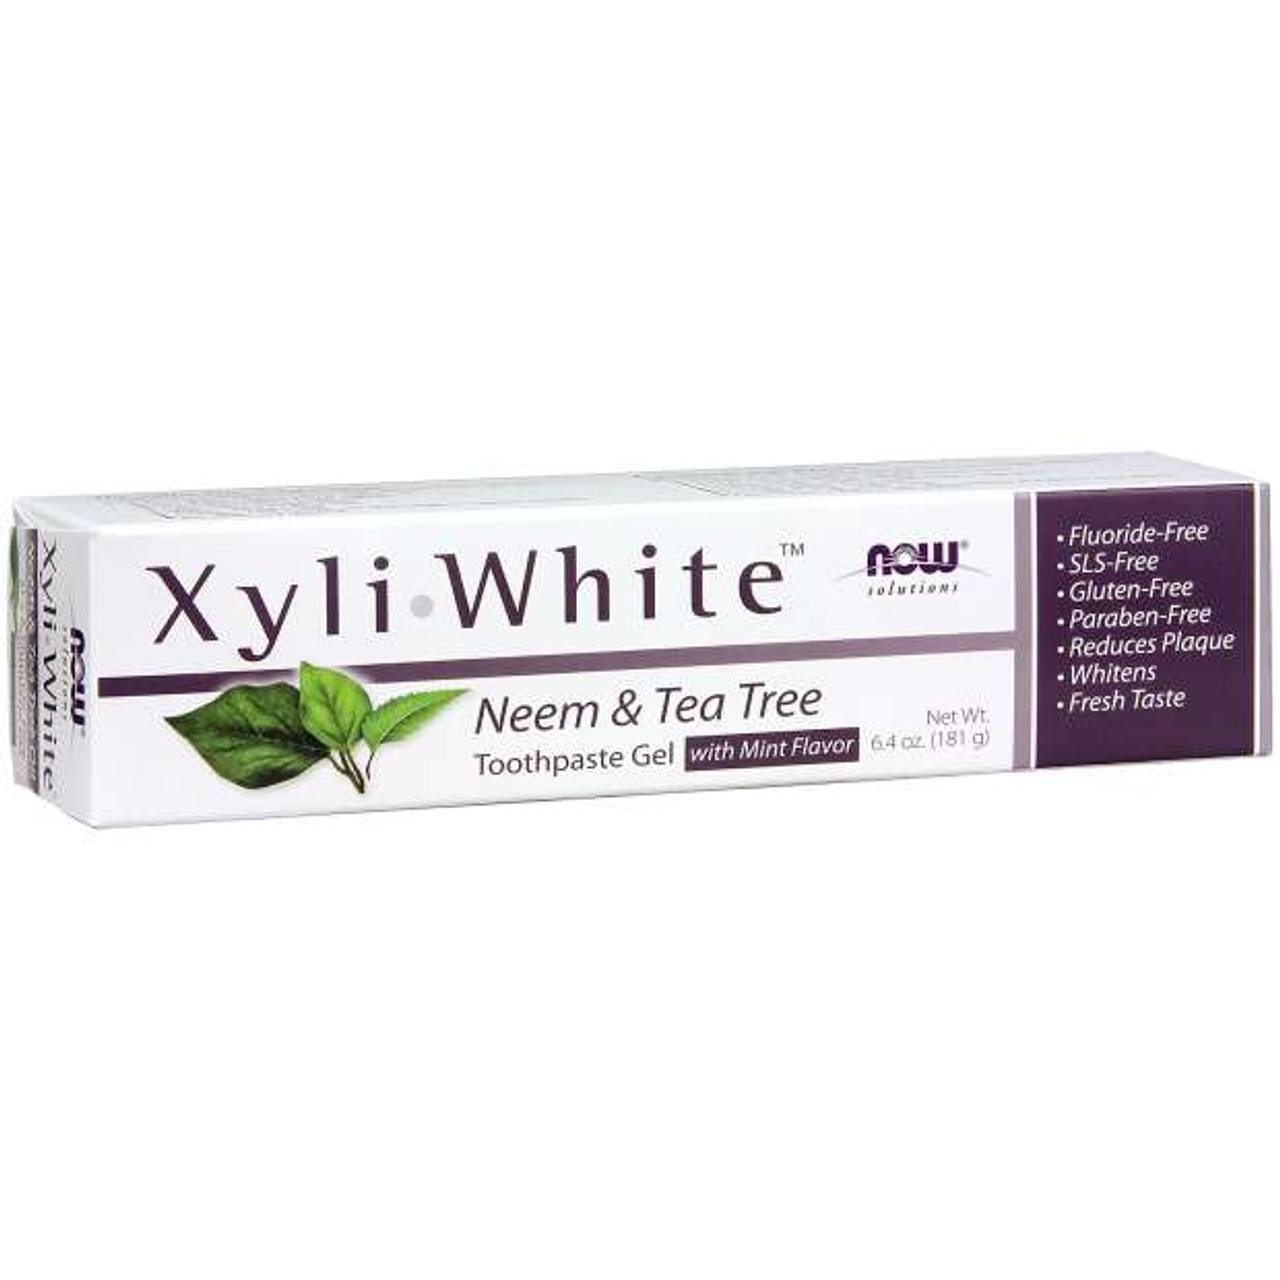 NOW® Solutions Xyliwhite™ Neem & Tea Tree Toothpaste Gel - 6.4 oz.